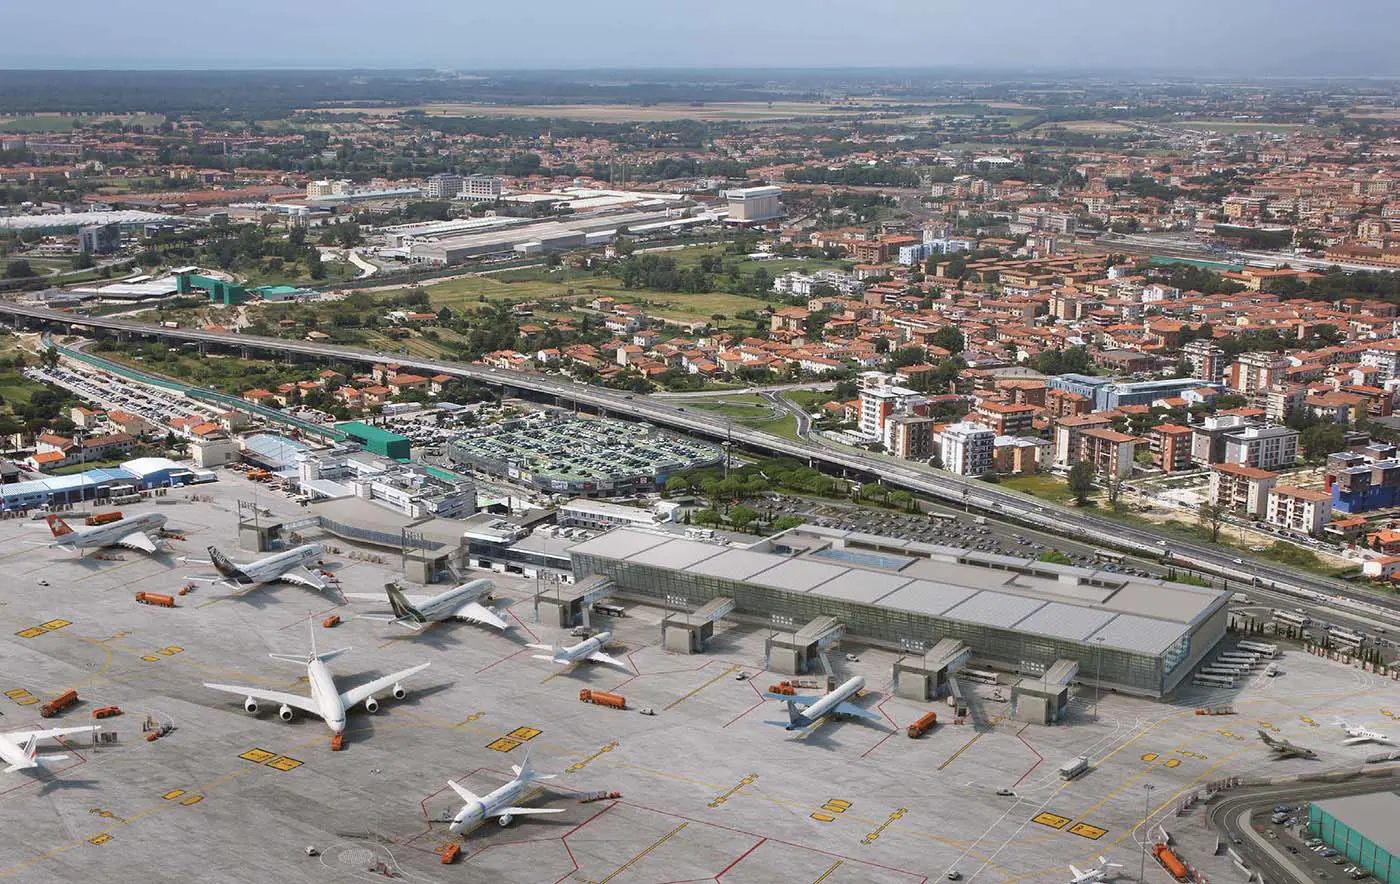 Pisa International Airport - Galileo Galilei - Expansion of the Passenger Terminal